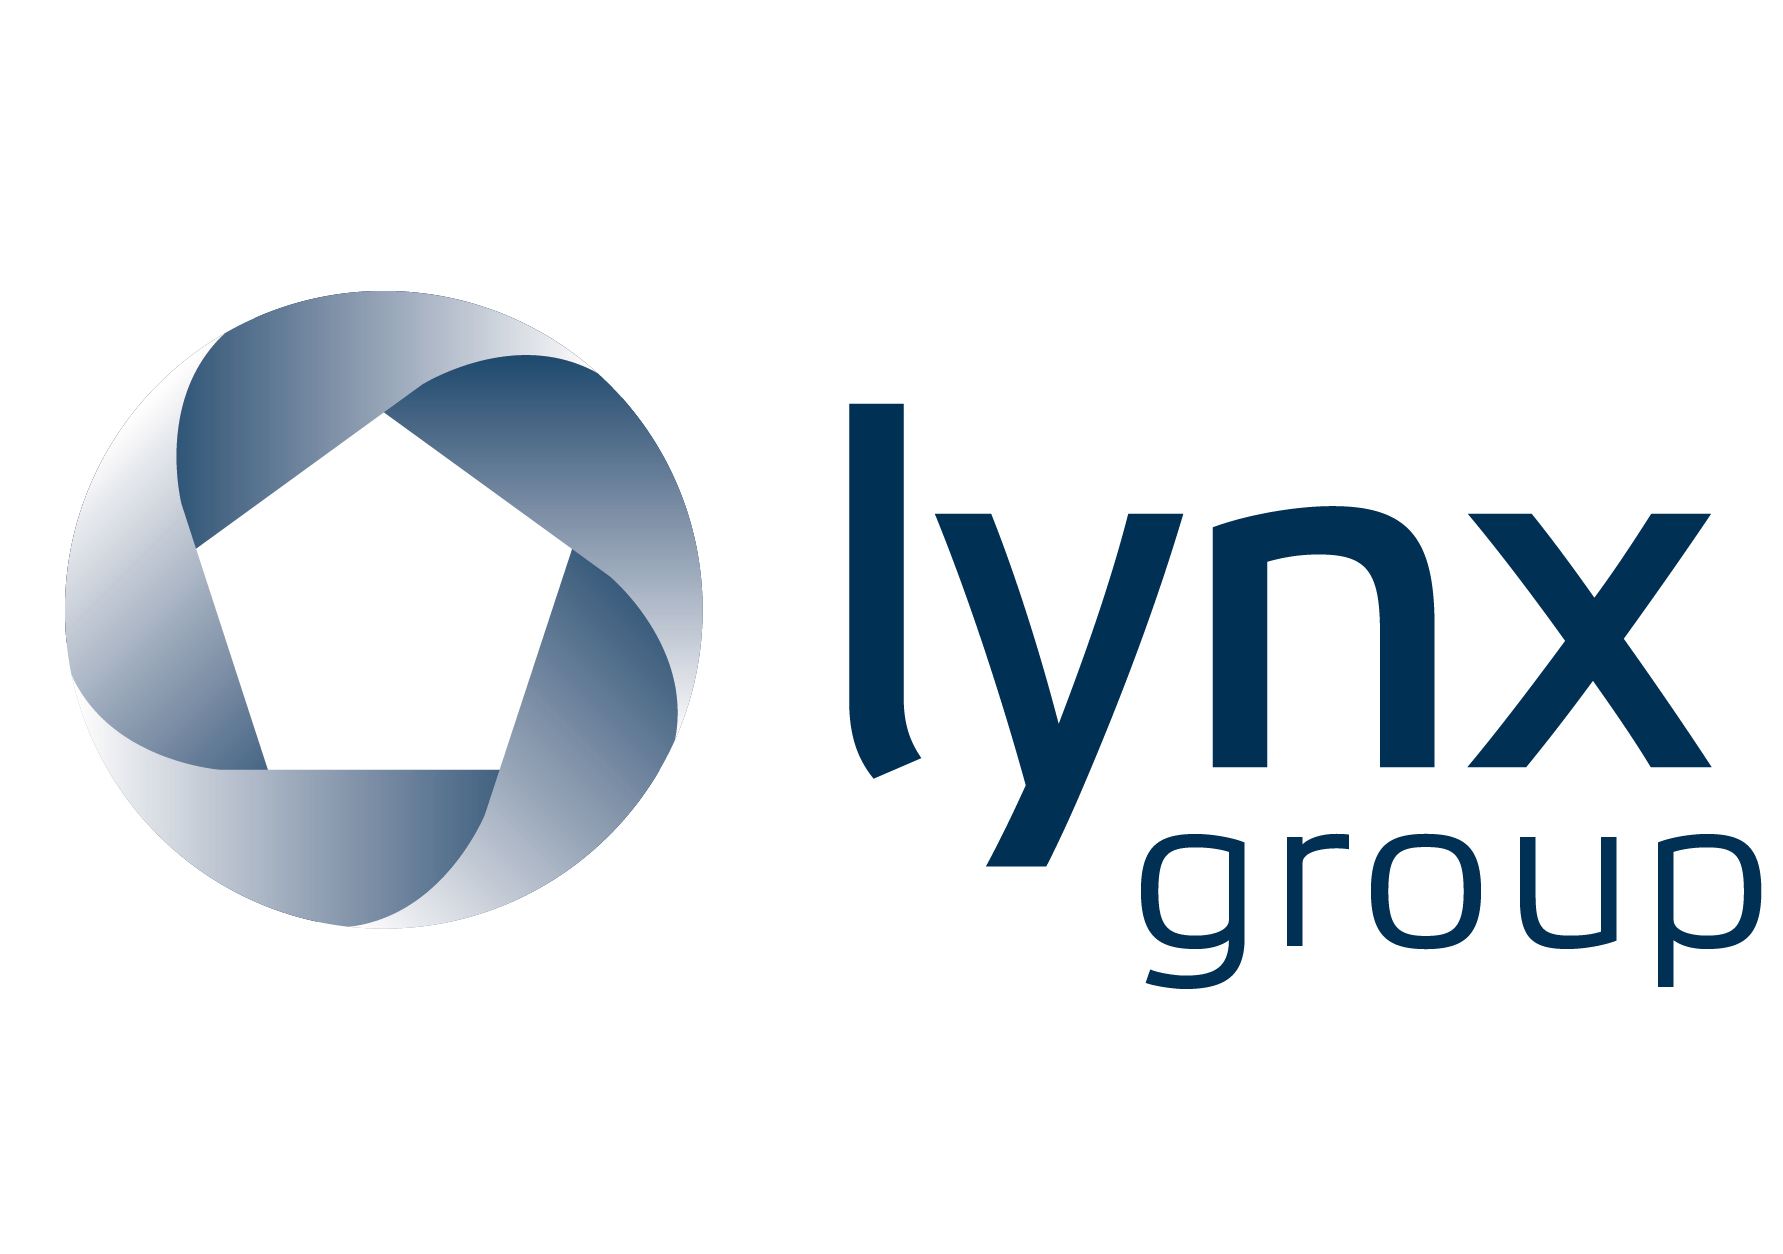 Lynx gruop colaboradora con SecuriBath